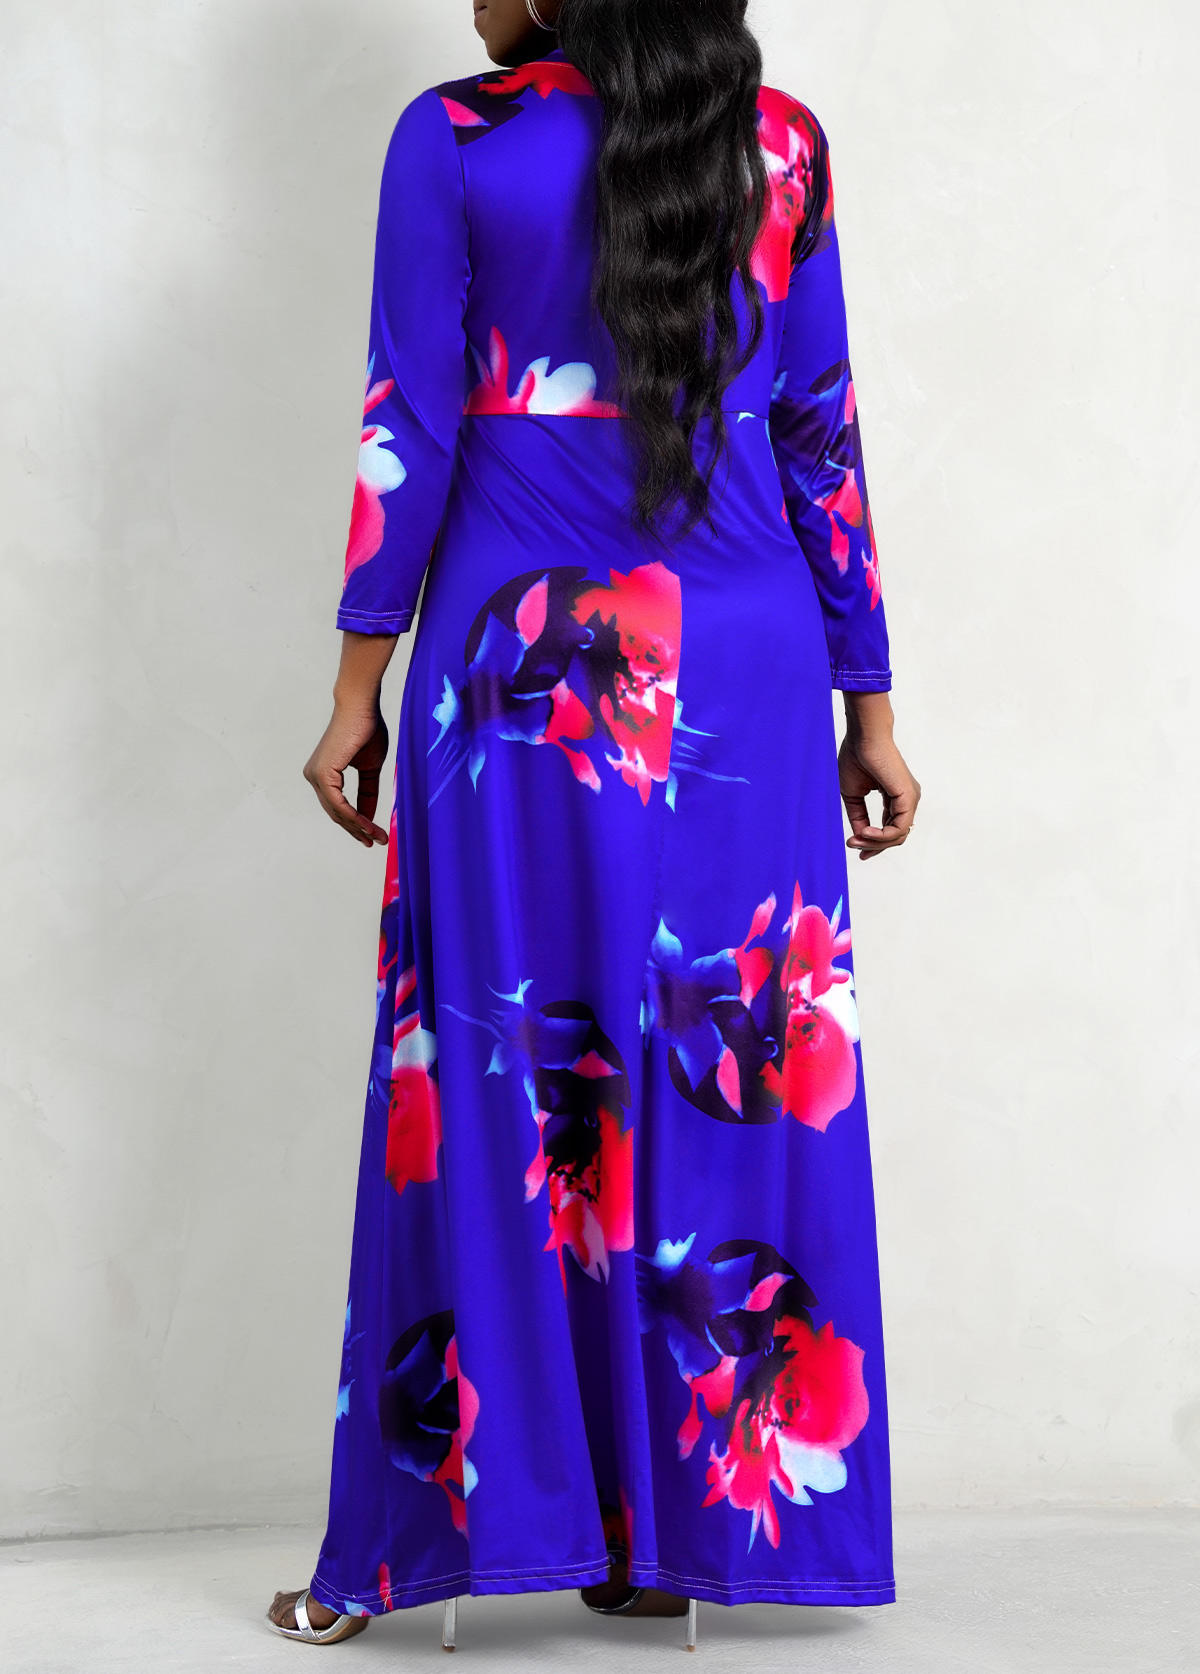 Purplish Blue 3/4 Sleeve Floral Print Dress